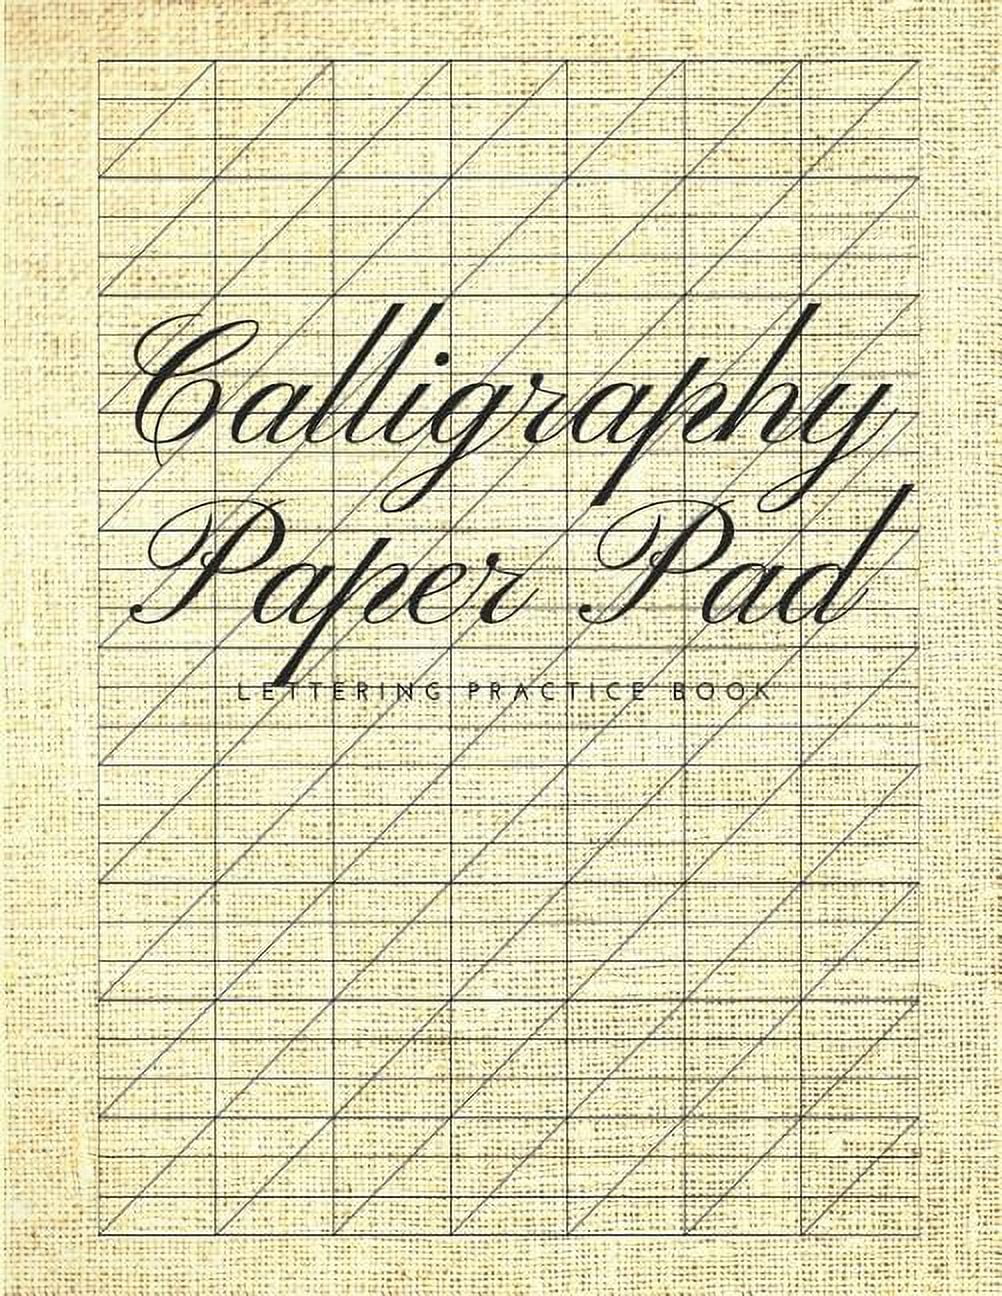 Mastering Modern Calligraphy Book